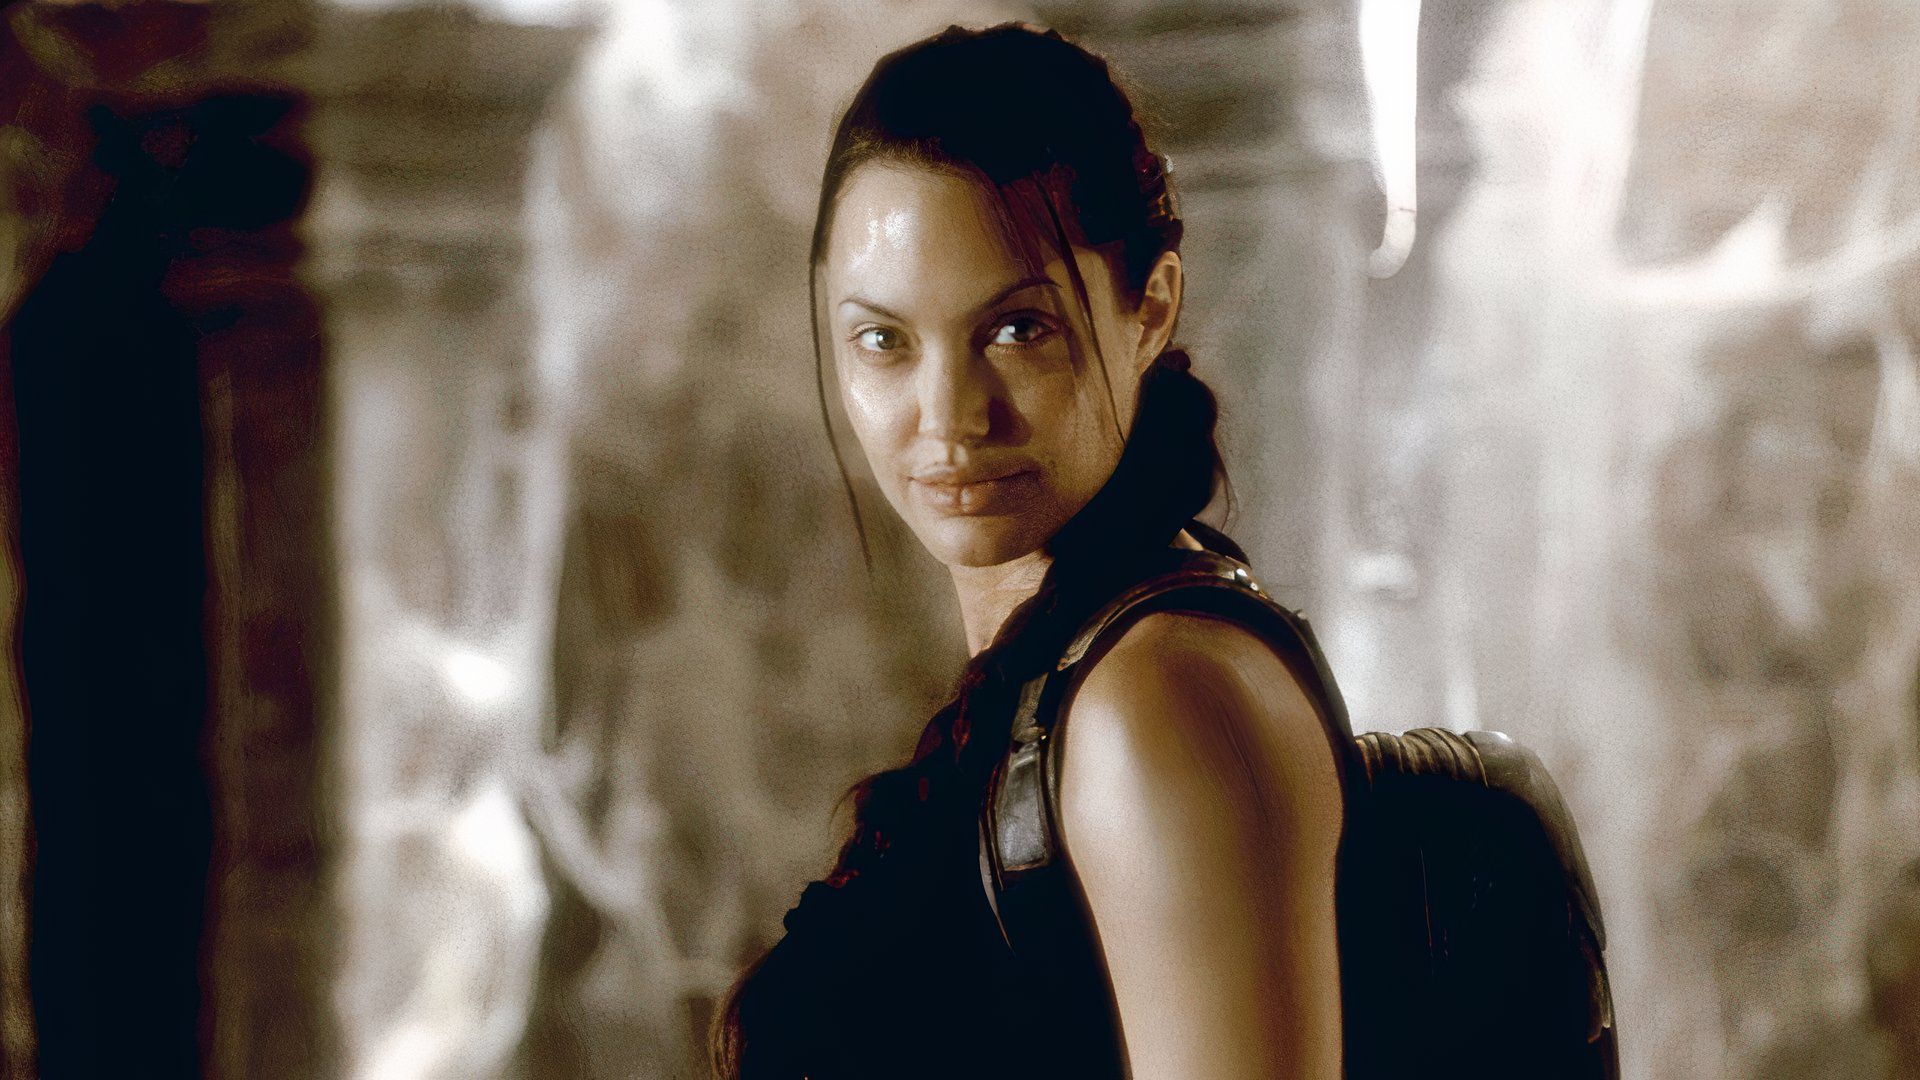 Lara smiles at the camera in Tomb Raider